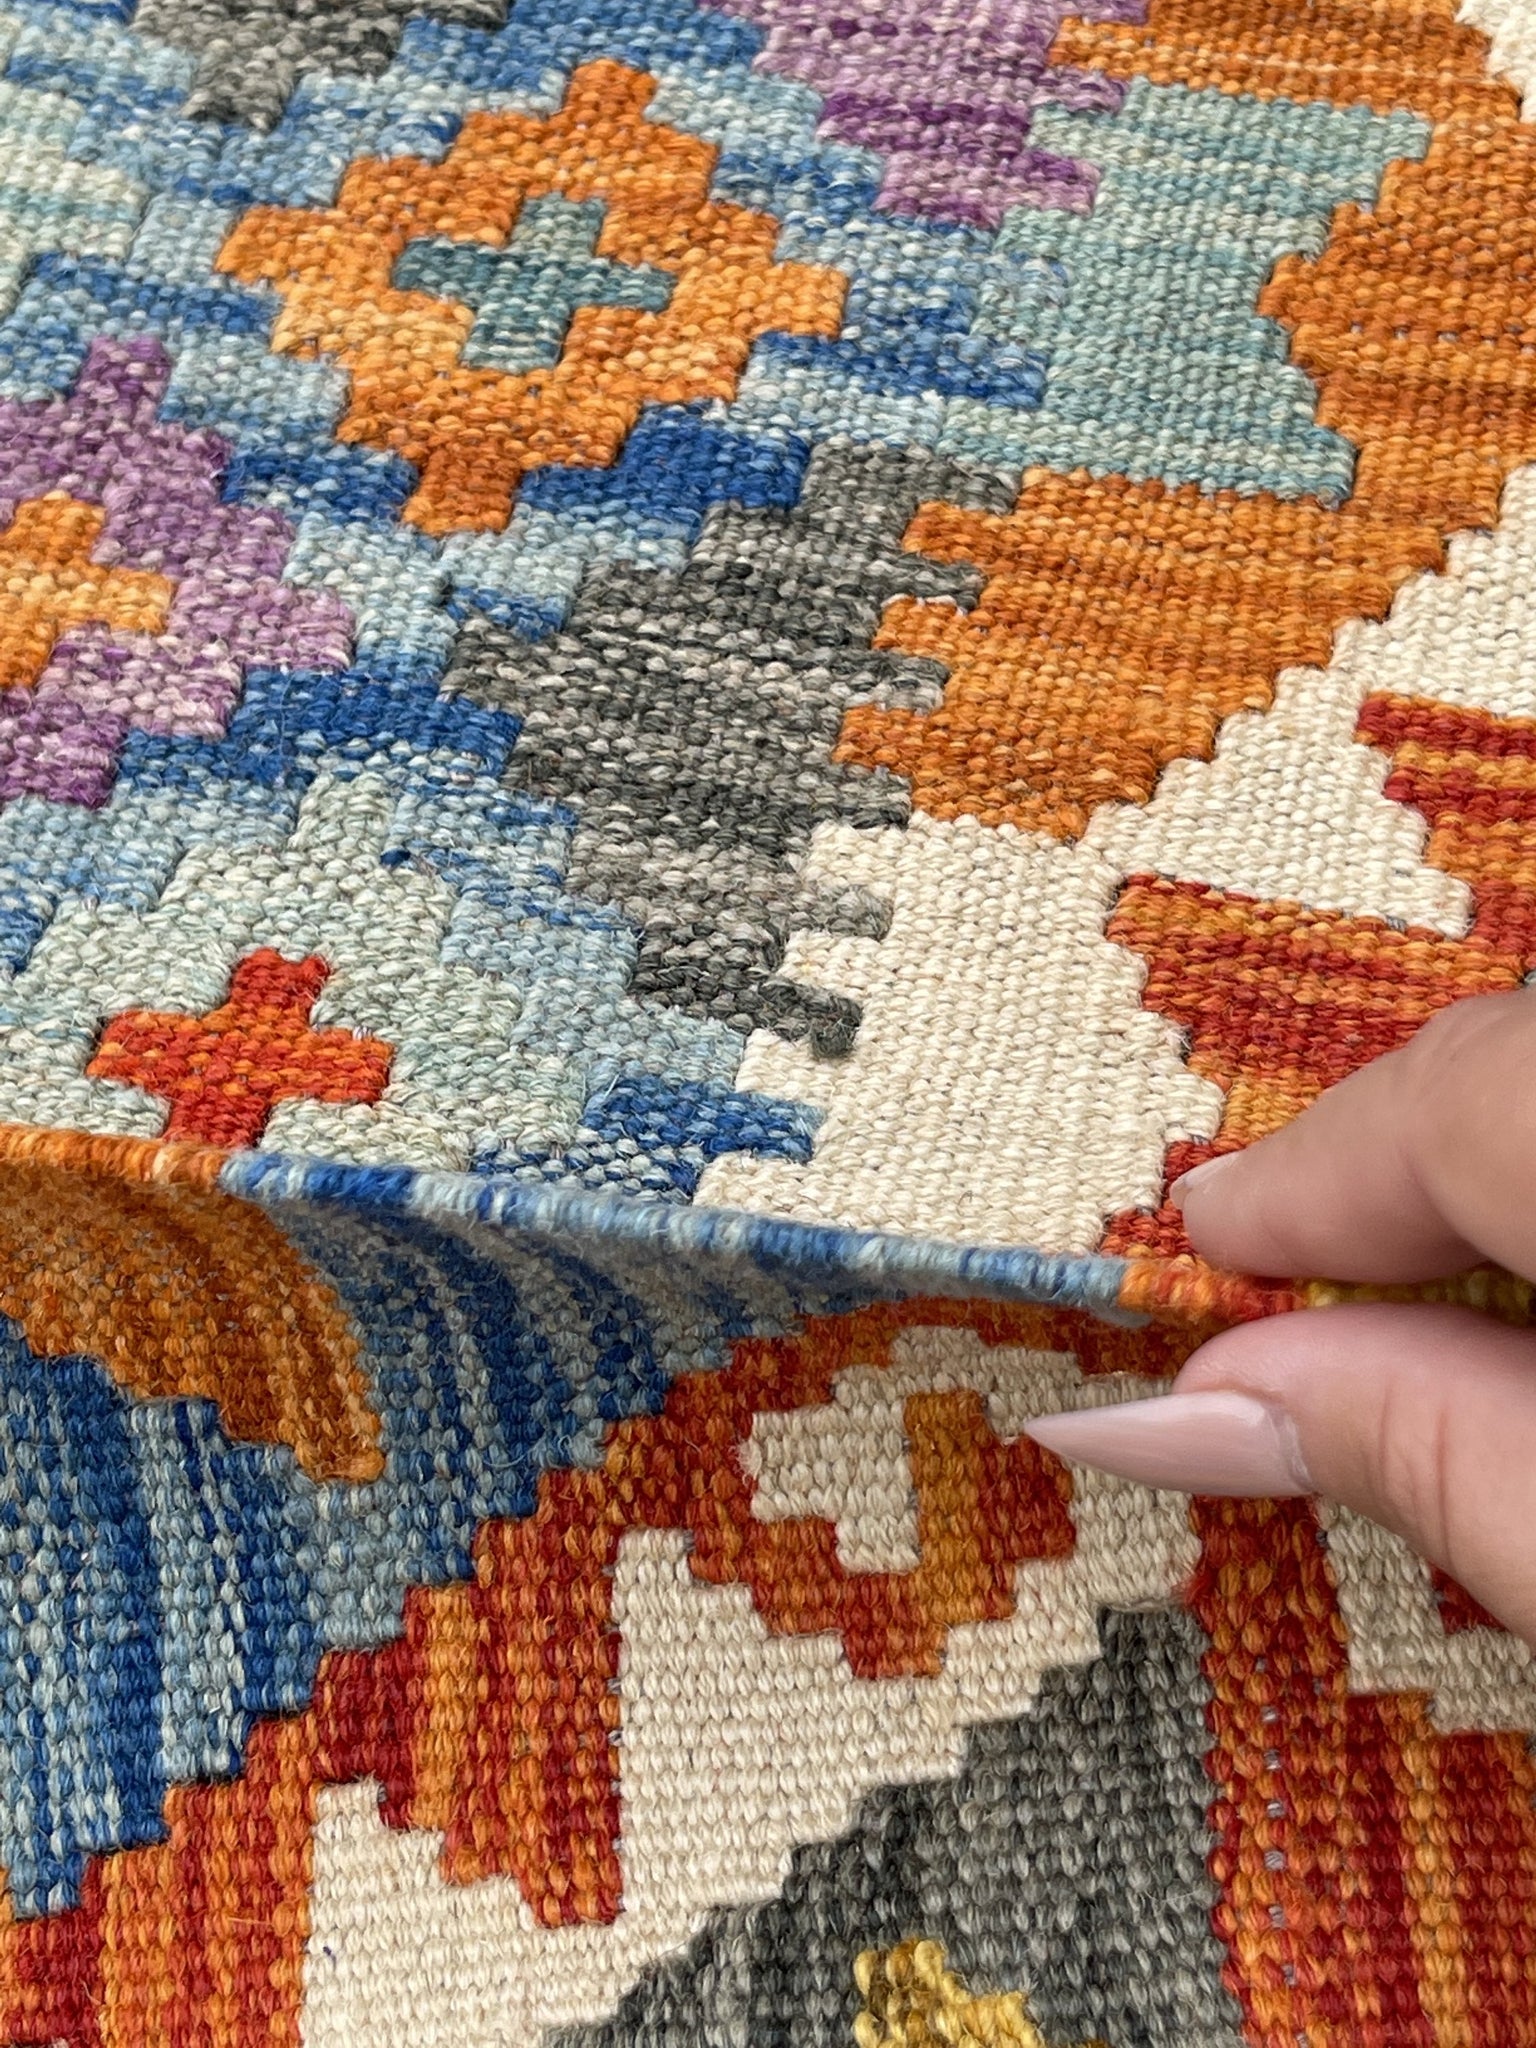 3x13 (90x395) Handmade Afghan Kilim Rug Runner | Blue Sage Green Ivory Cream Orange Purple | Flatweave Flat Weave Tribal Oriental Boho Wool